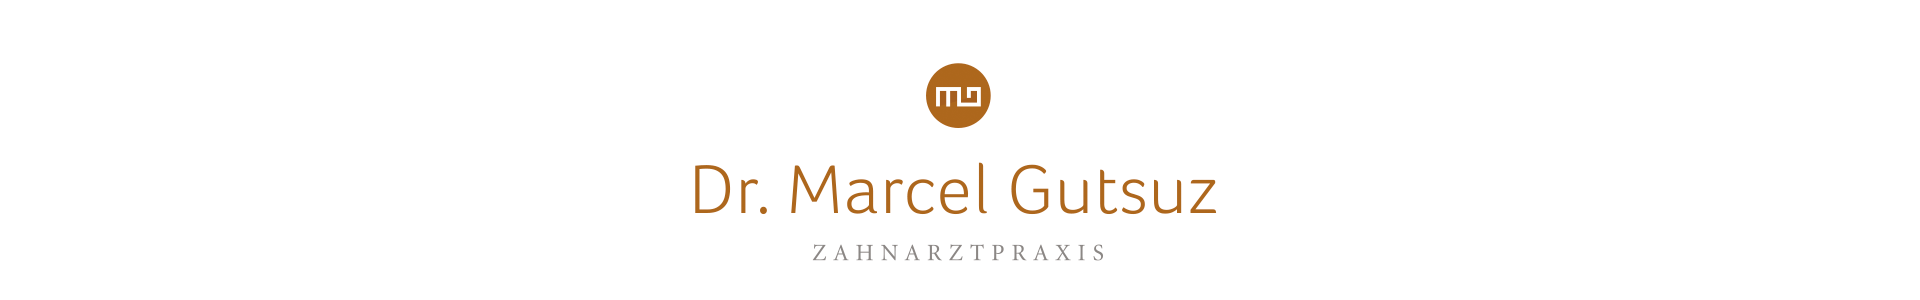 Dr. Marcel Gutsuz, Zahnarztpraxis Nordhorn